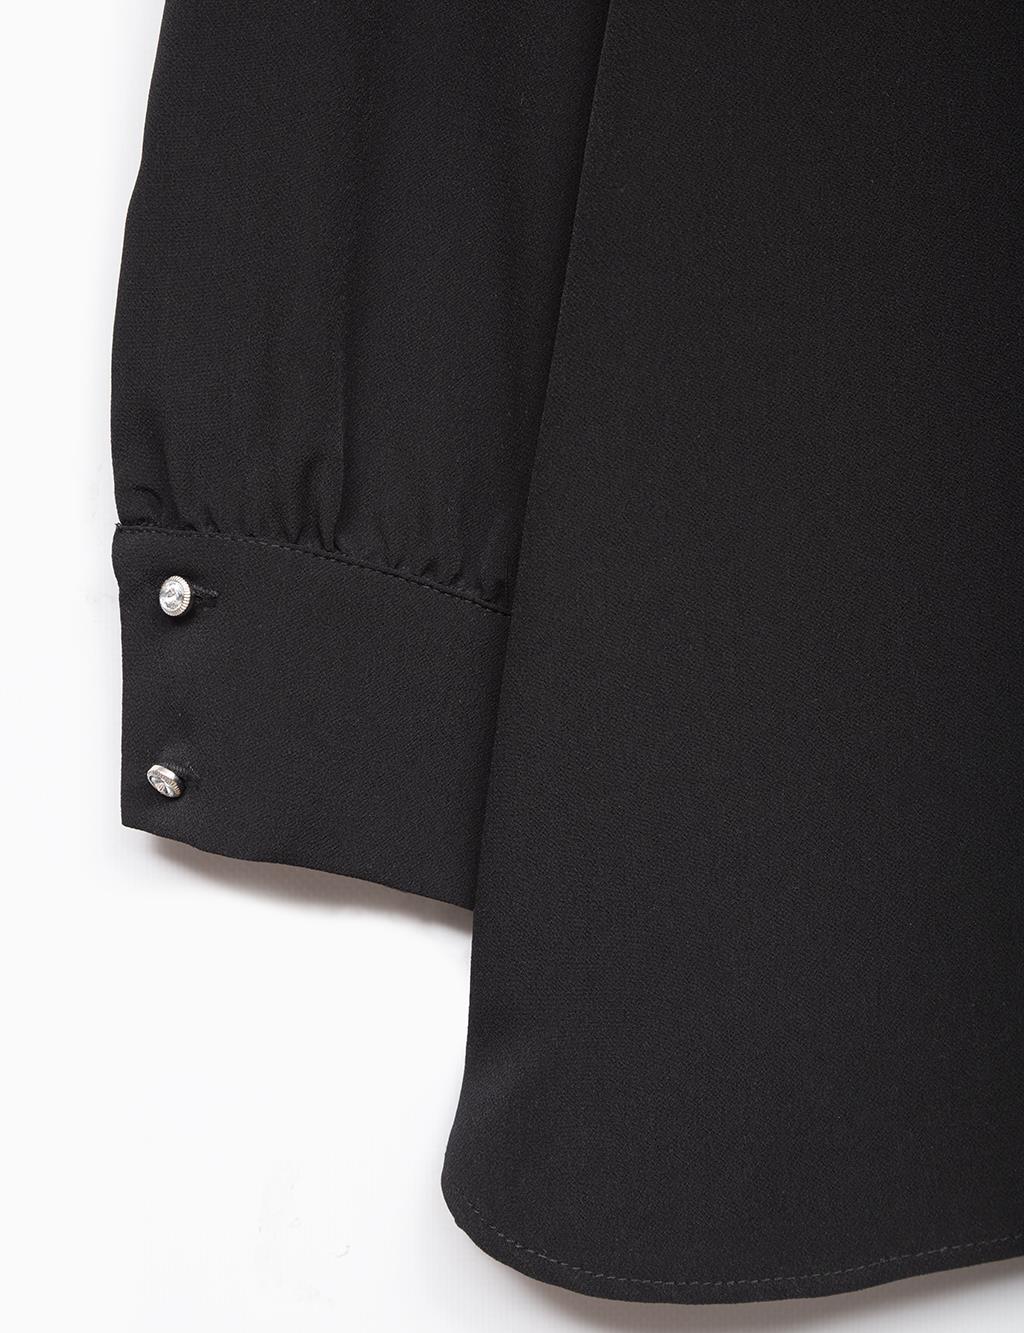 Ruffled Collar Embroidered Tunic in Black